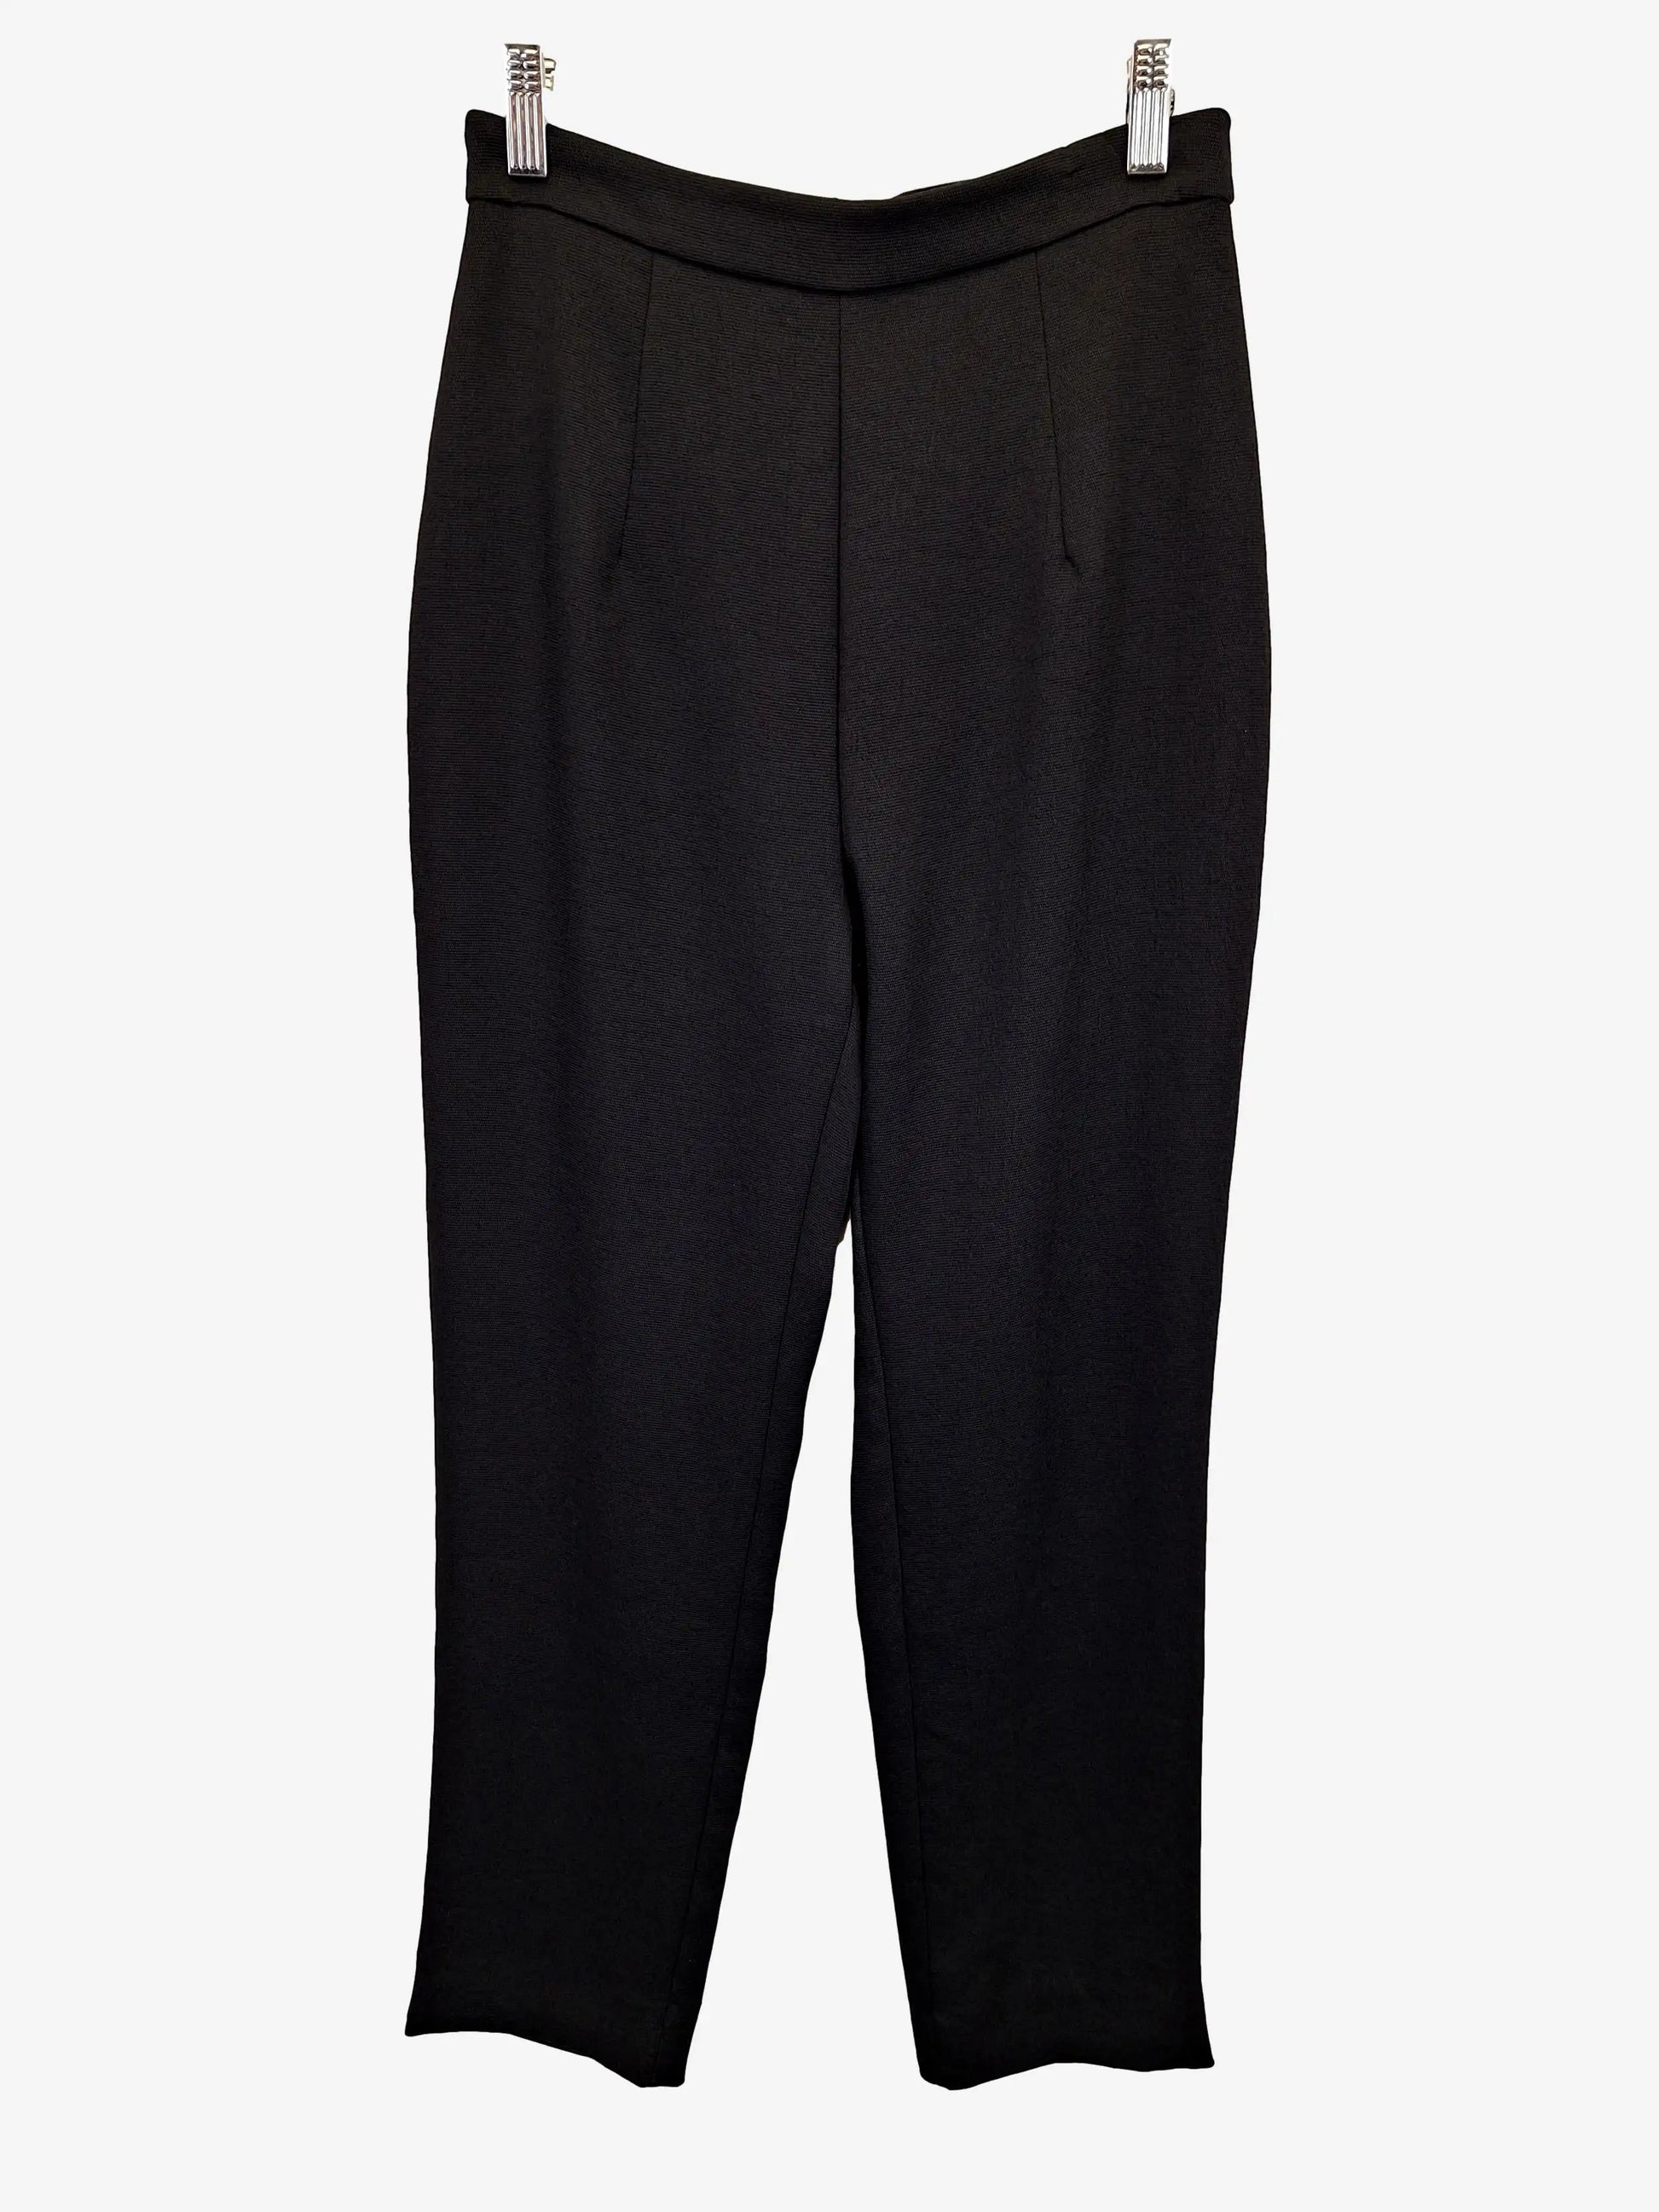 Kookai Staple Work Pants Size 10 – SwapUp